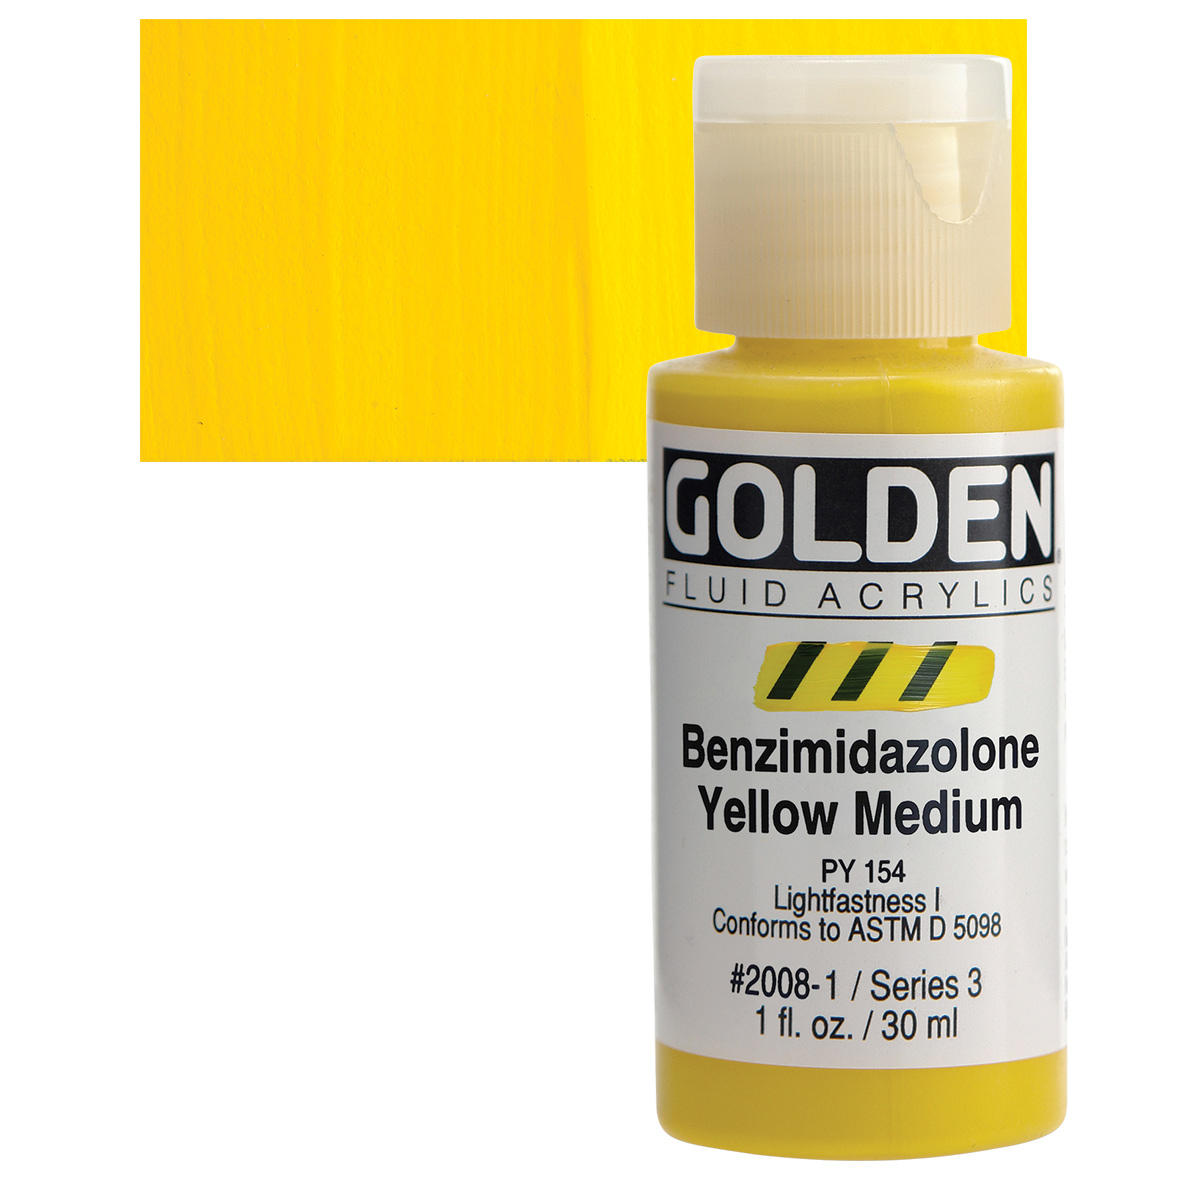 Lumintrail Golden Fluid Acrylic Paint, Titan Buff, 16 fl. oz. Bottles, Color Acrylic Paints Sticky Notes